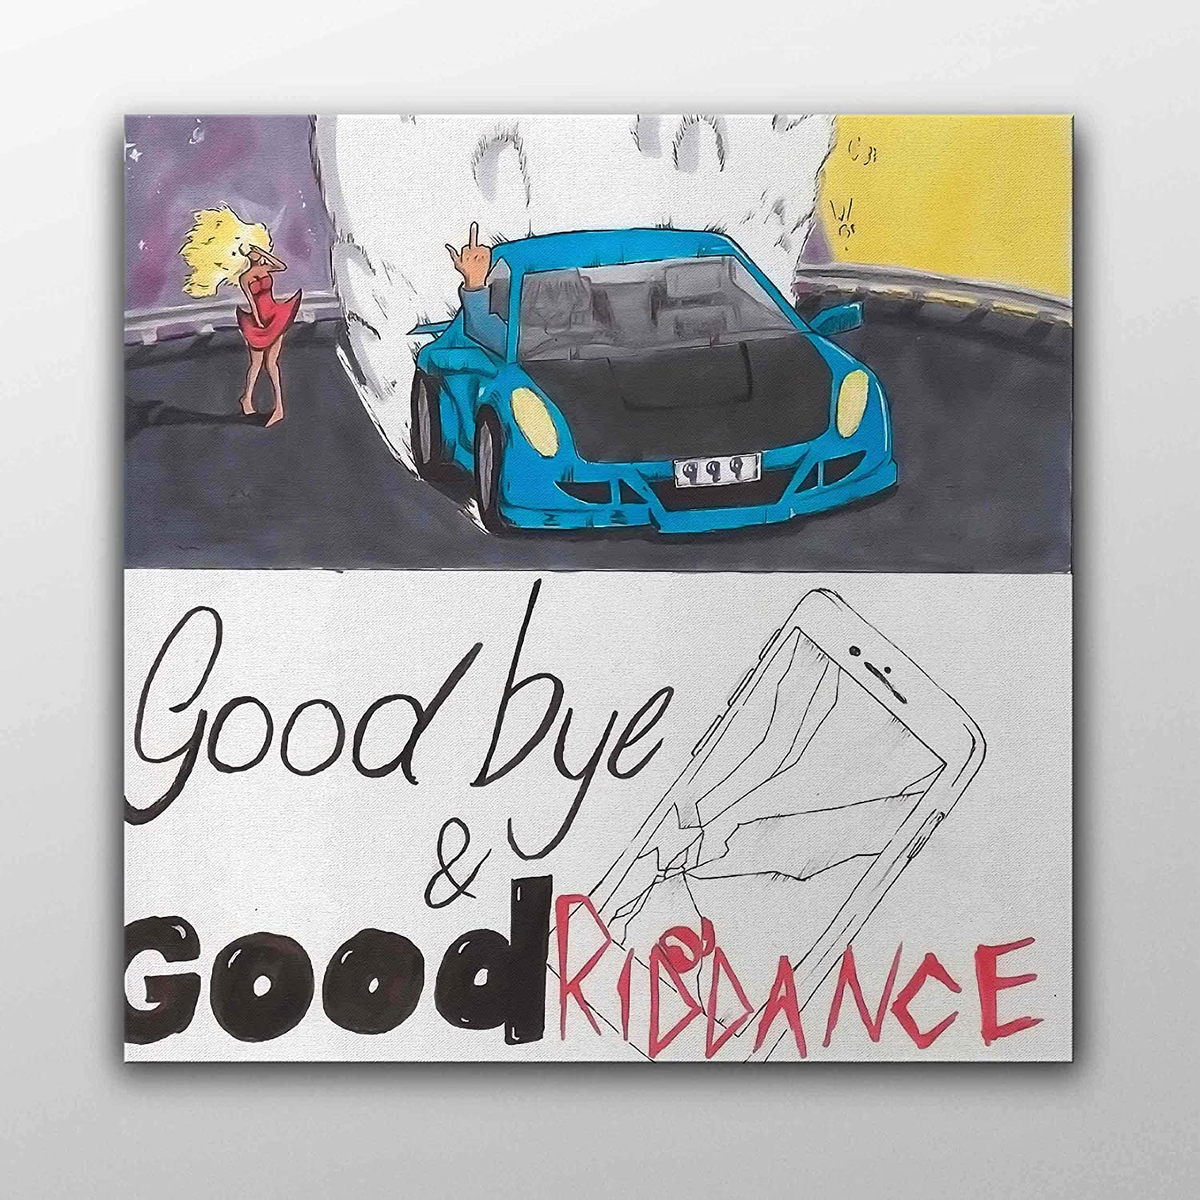 Альбом Goodbye and good Riddance. Goodbye good Riddance обложка альбома. Juice World обложка. Juice World обложка альбома.